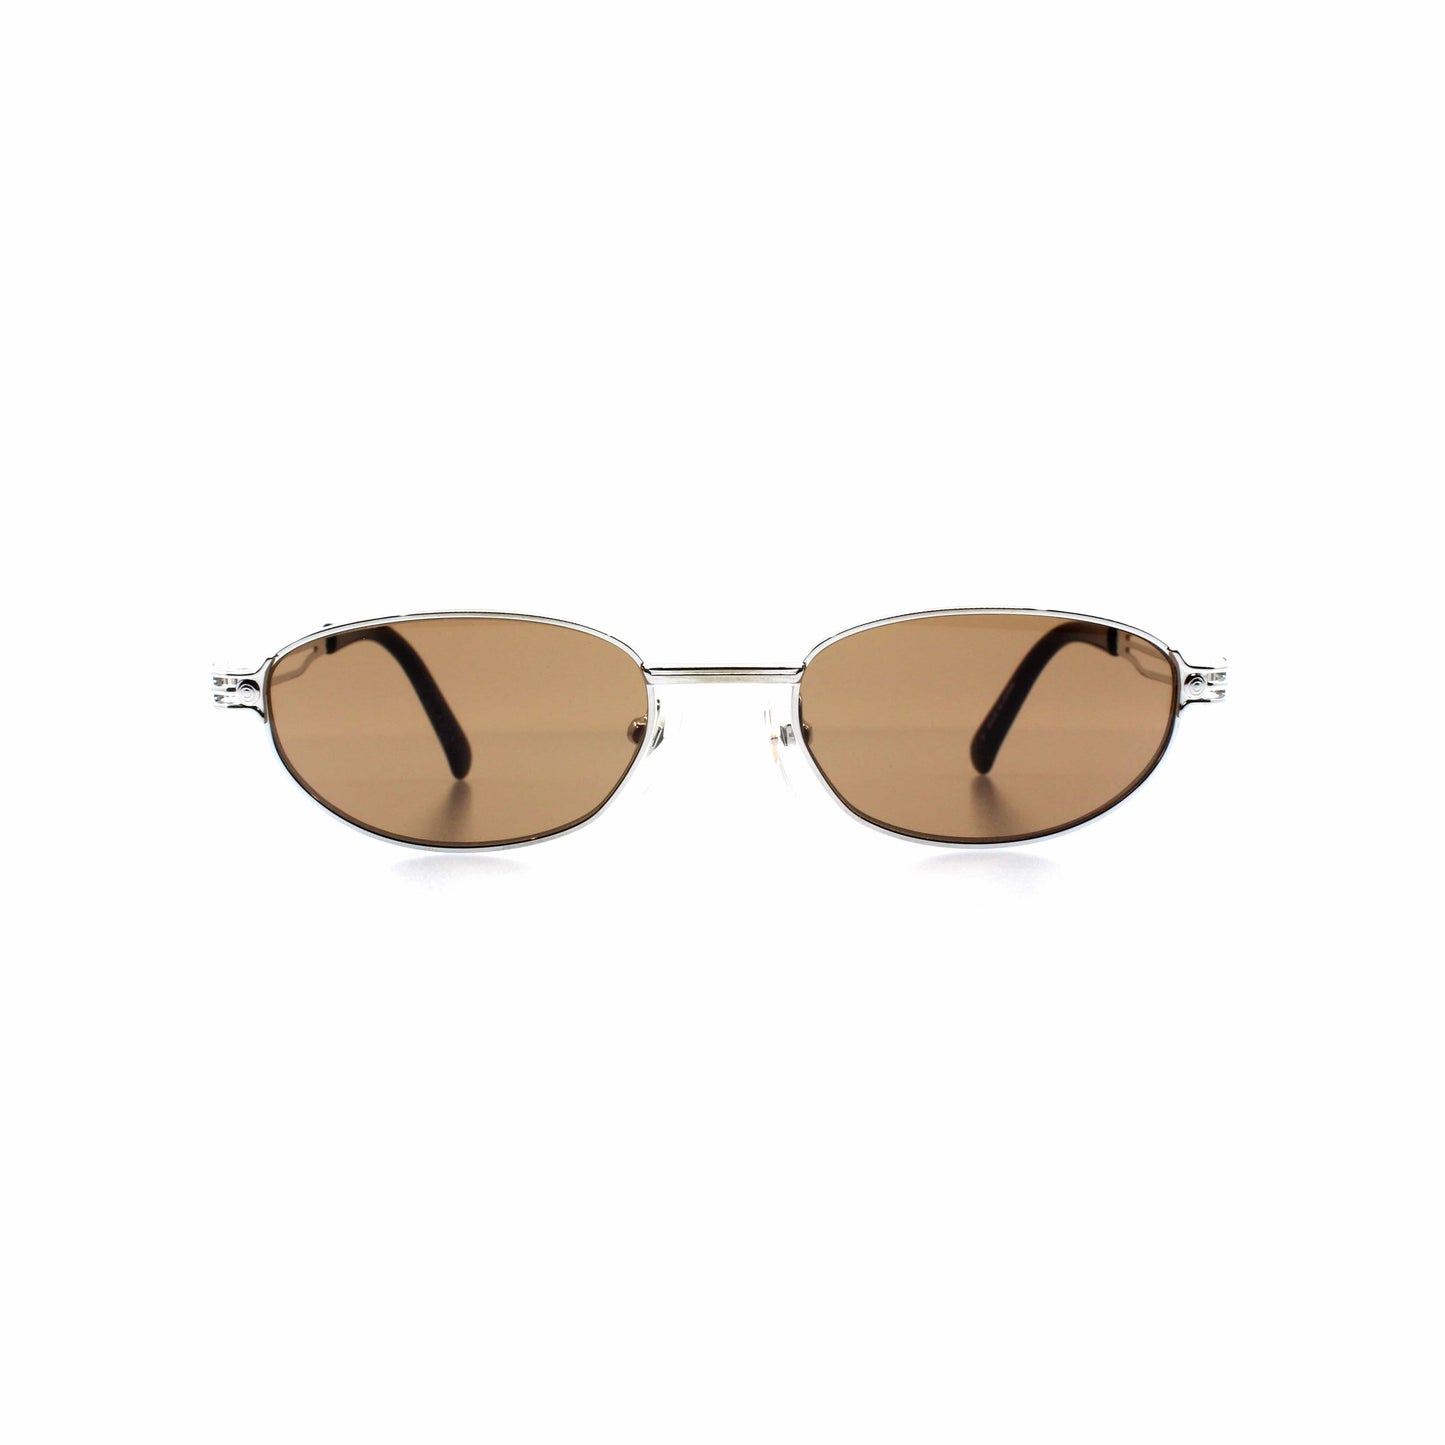 Silver Vintage Jean Paul Gaultier 58-0001 Sunglasses RSTKD Vintage